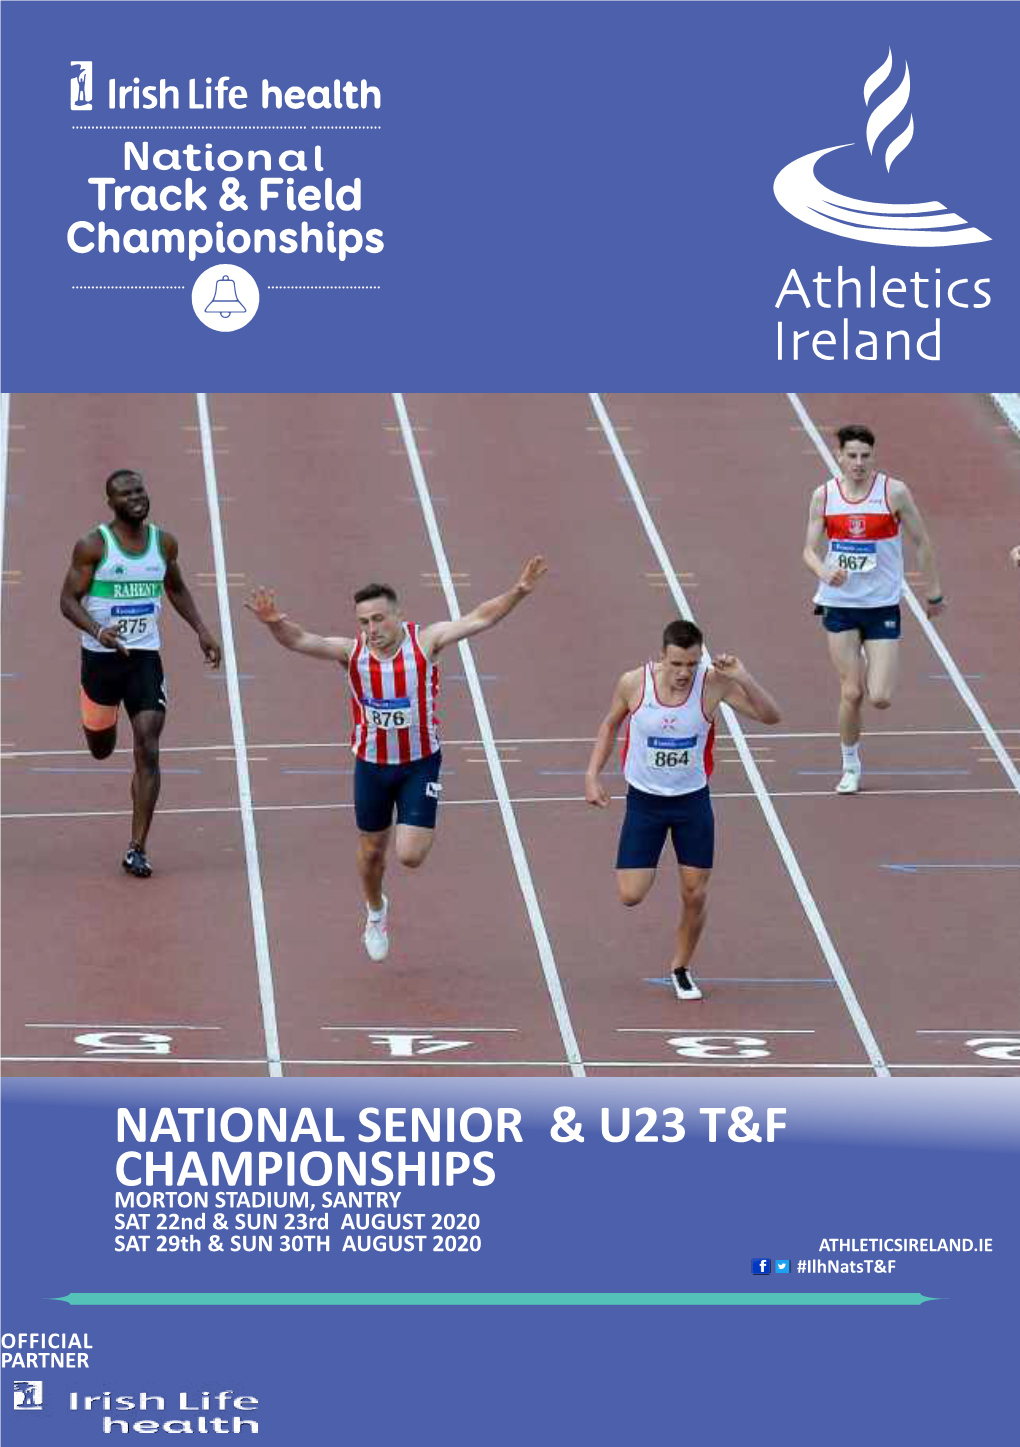 National Senior & U23 T&F Championships